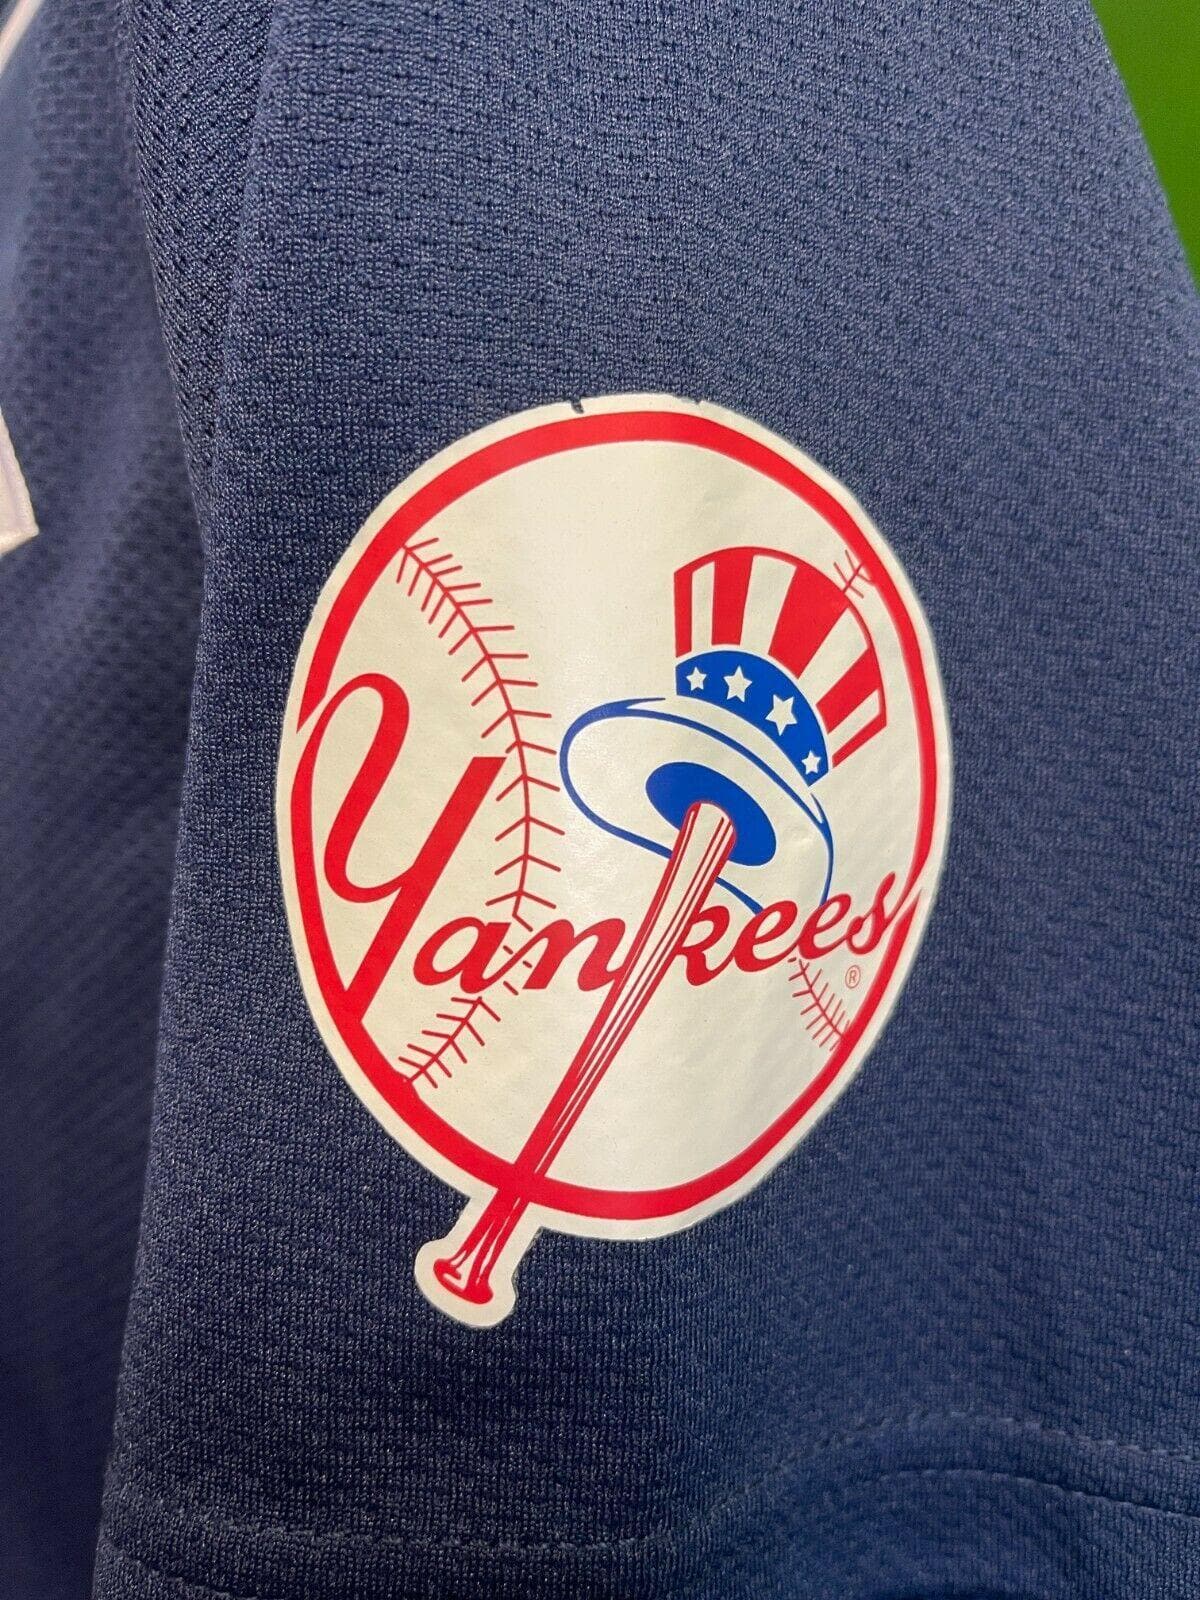 MLB New York Yankees Majestic Baseball Jersey Youth Large 14-16